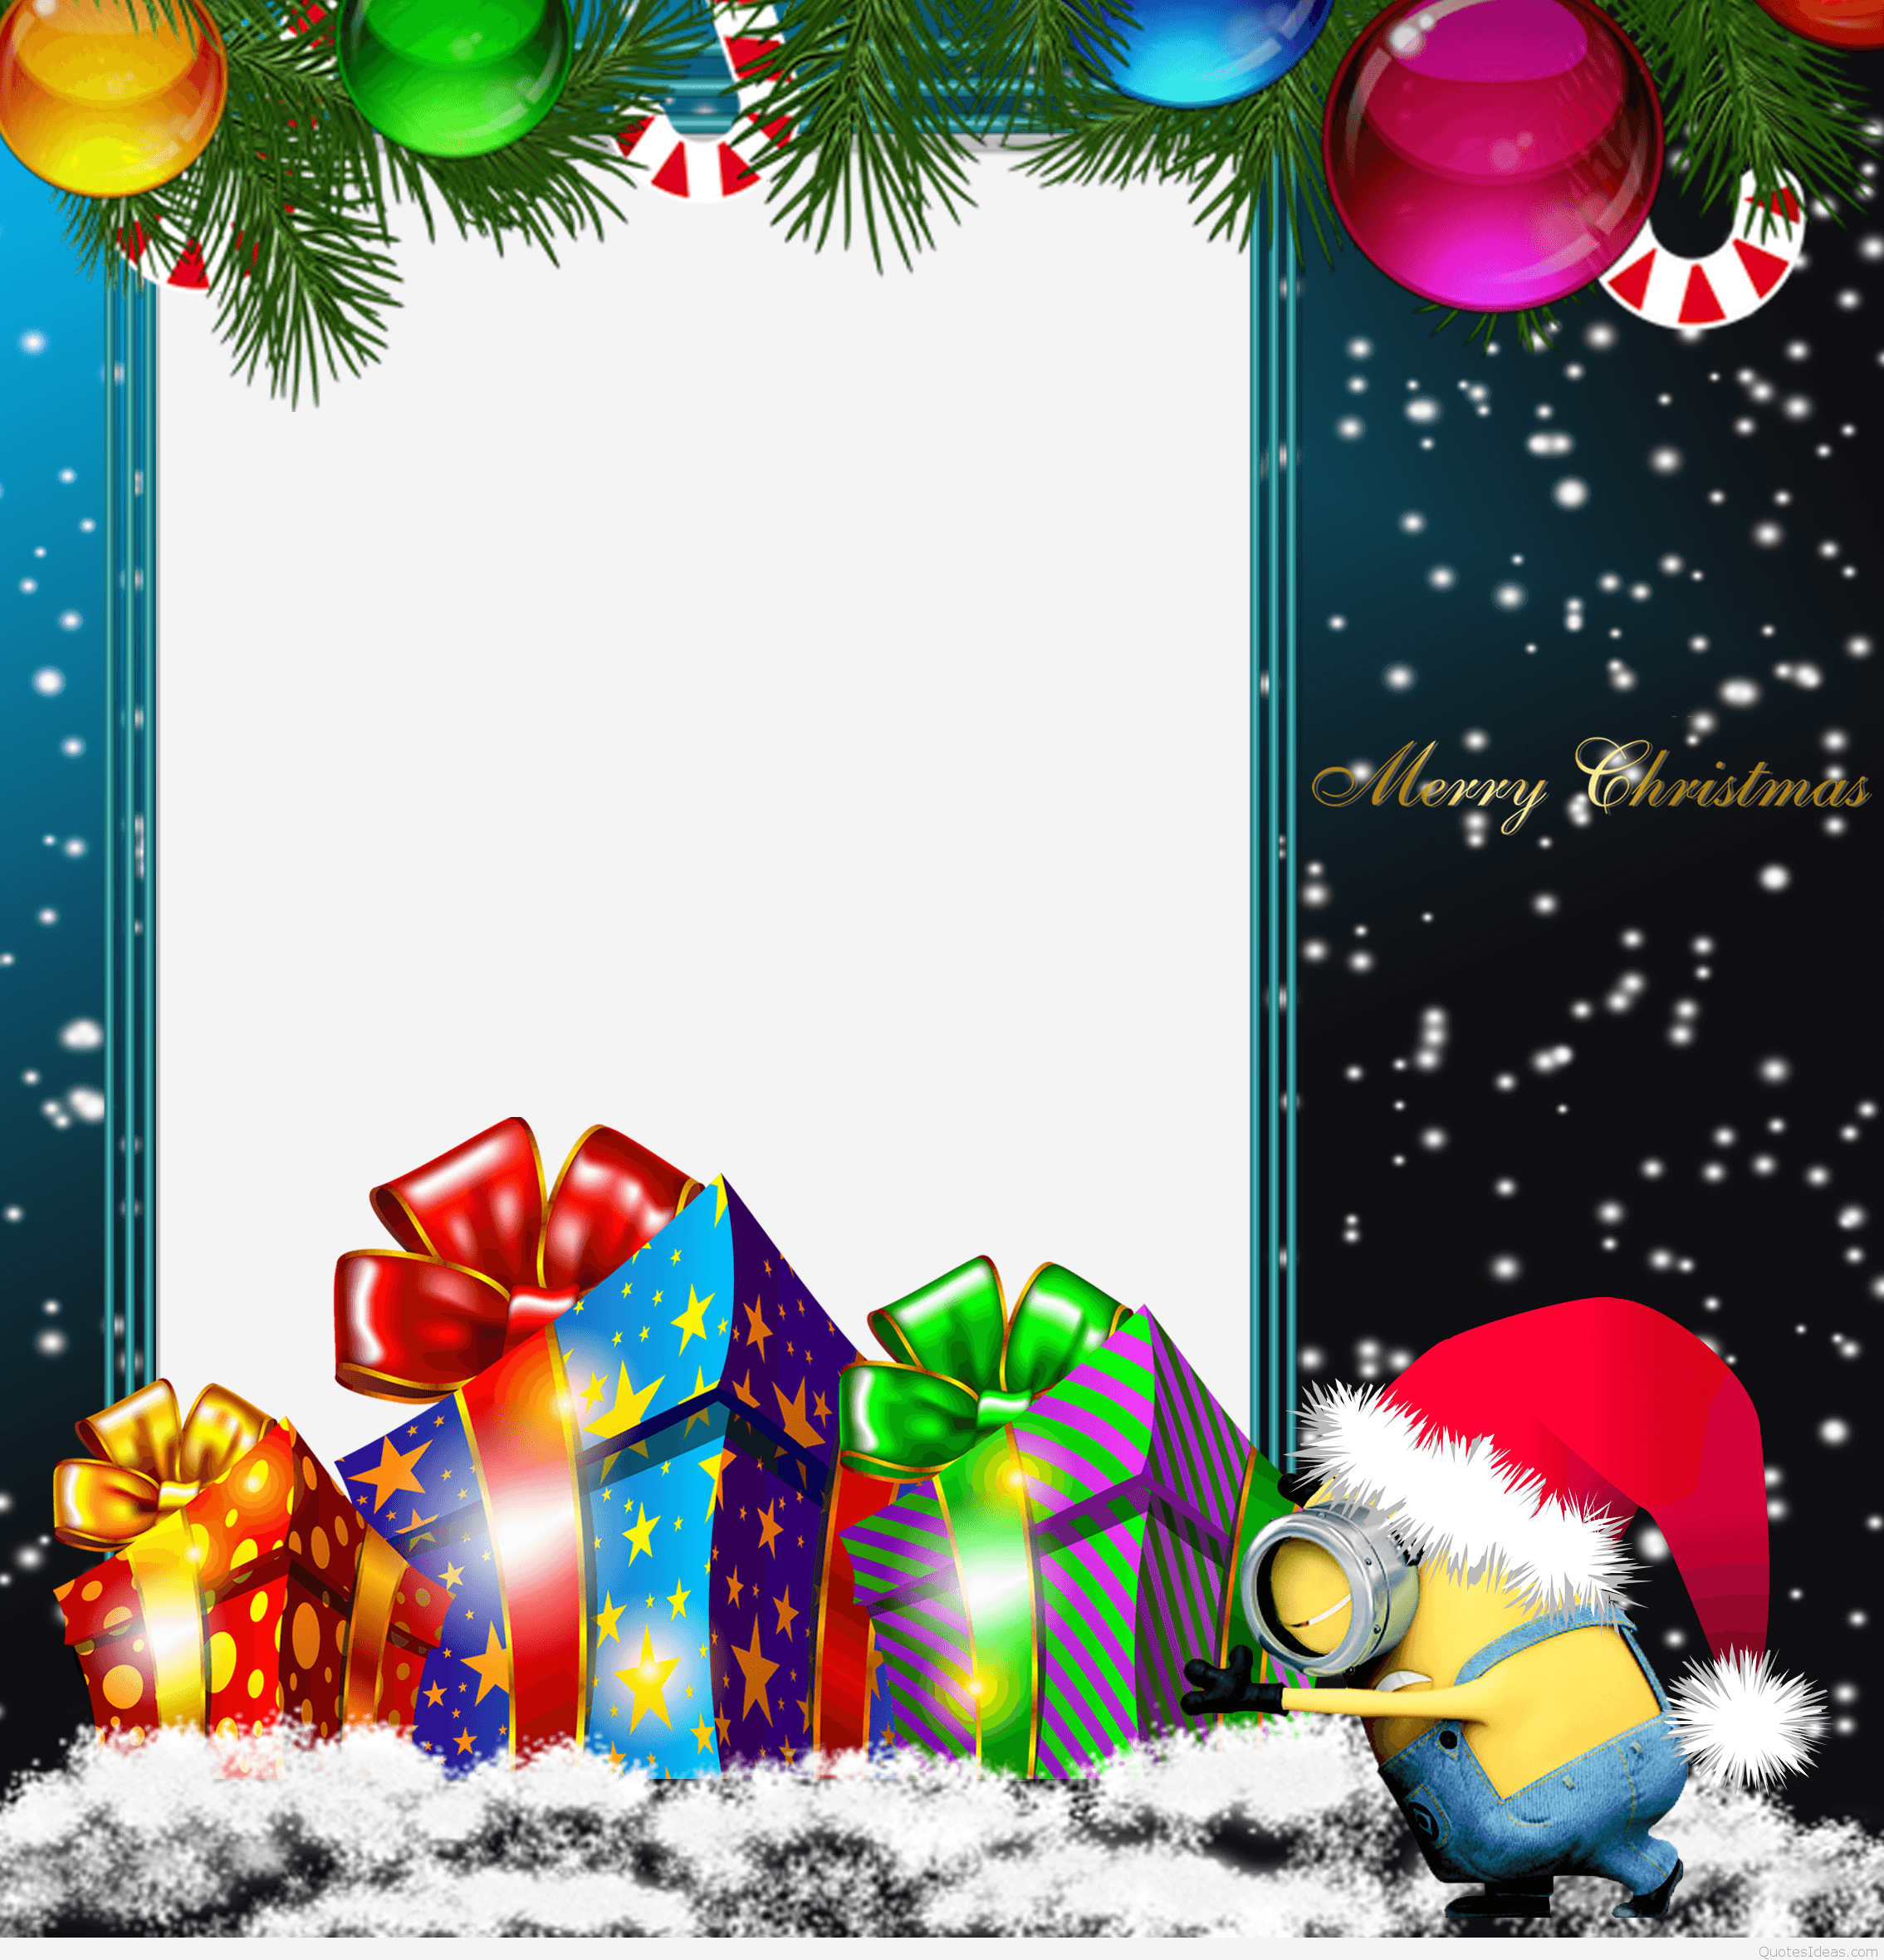 Funny Christmas Minions Wallpaper Image HD. HD Wallpaper